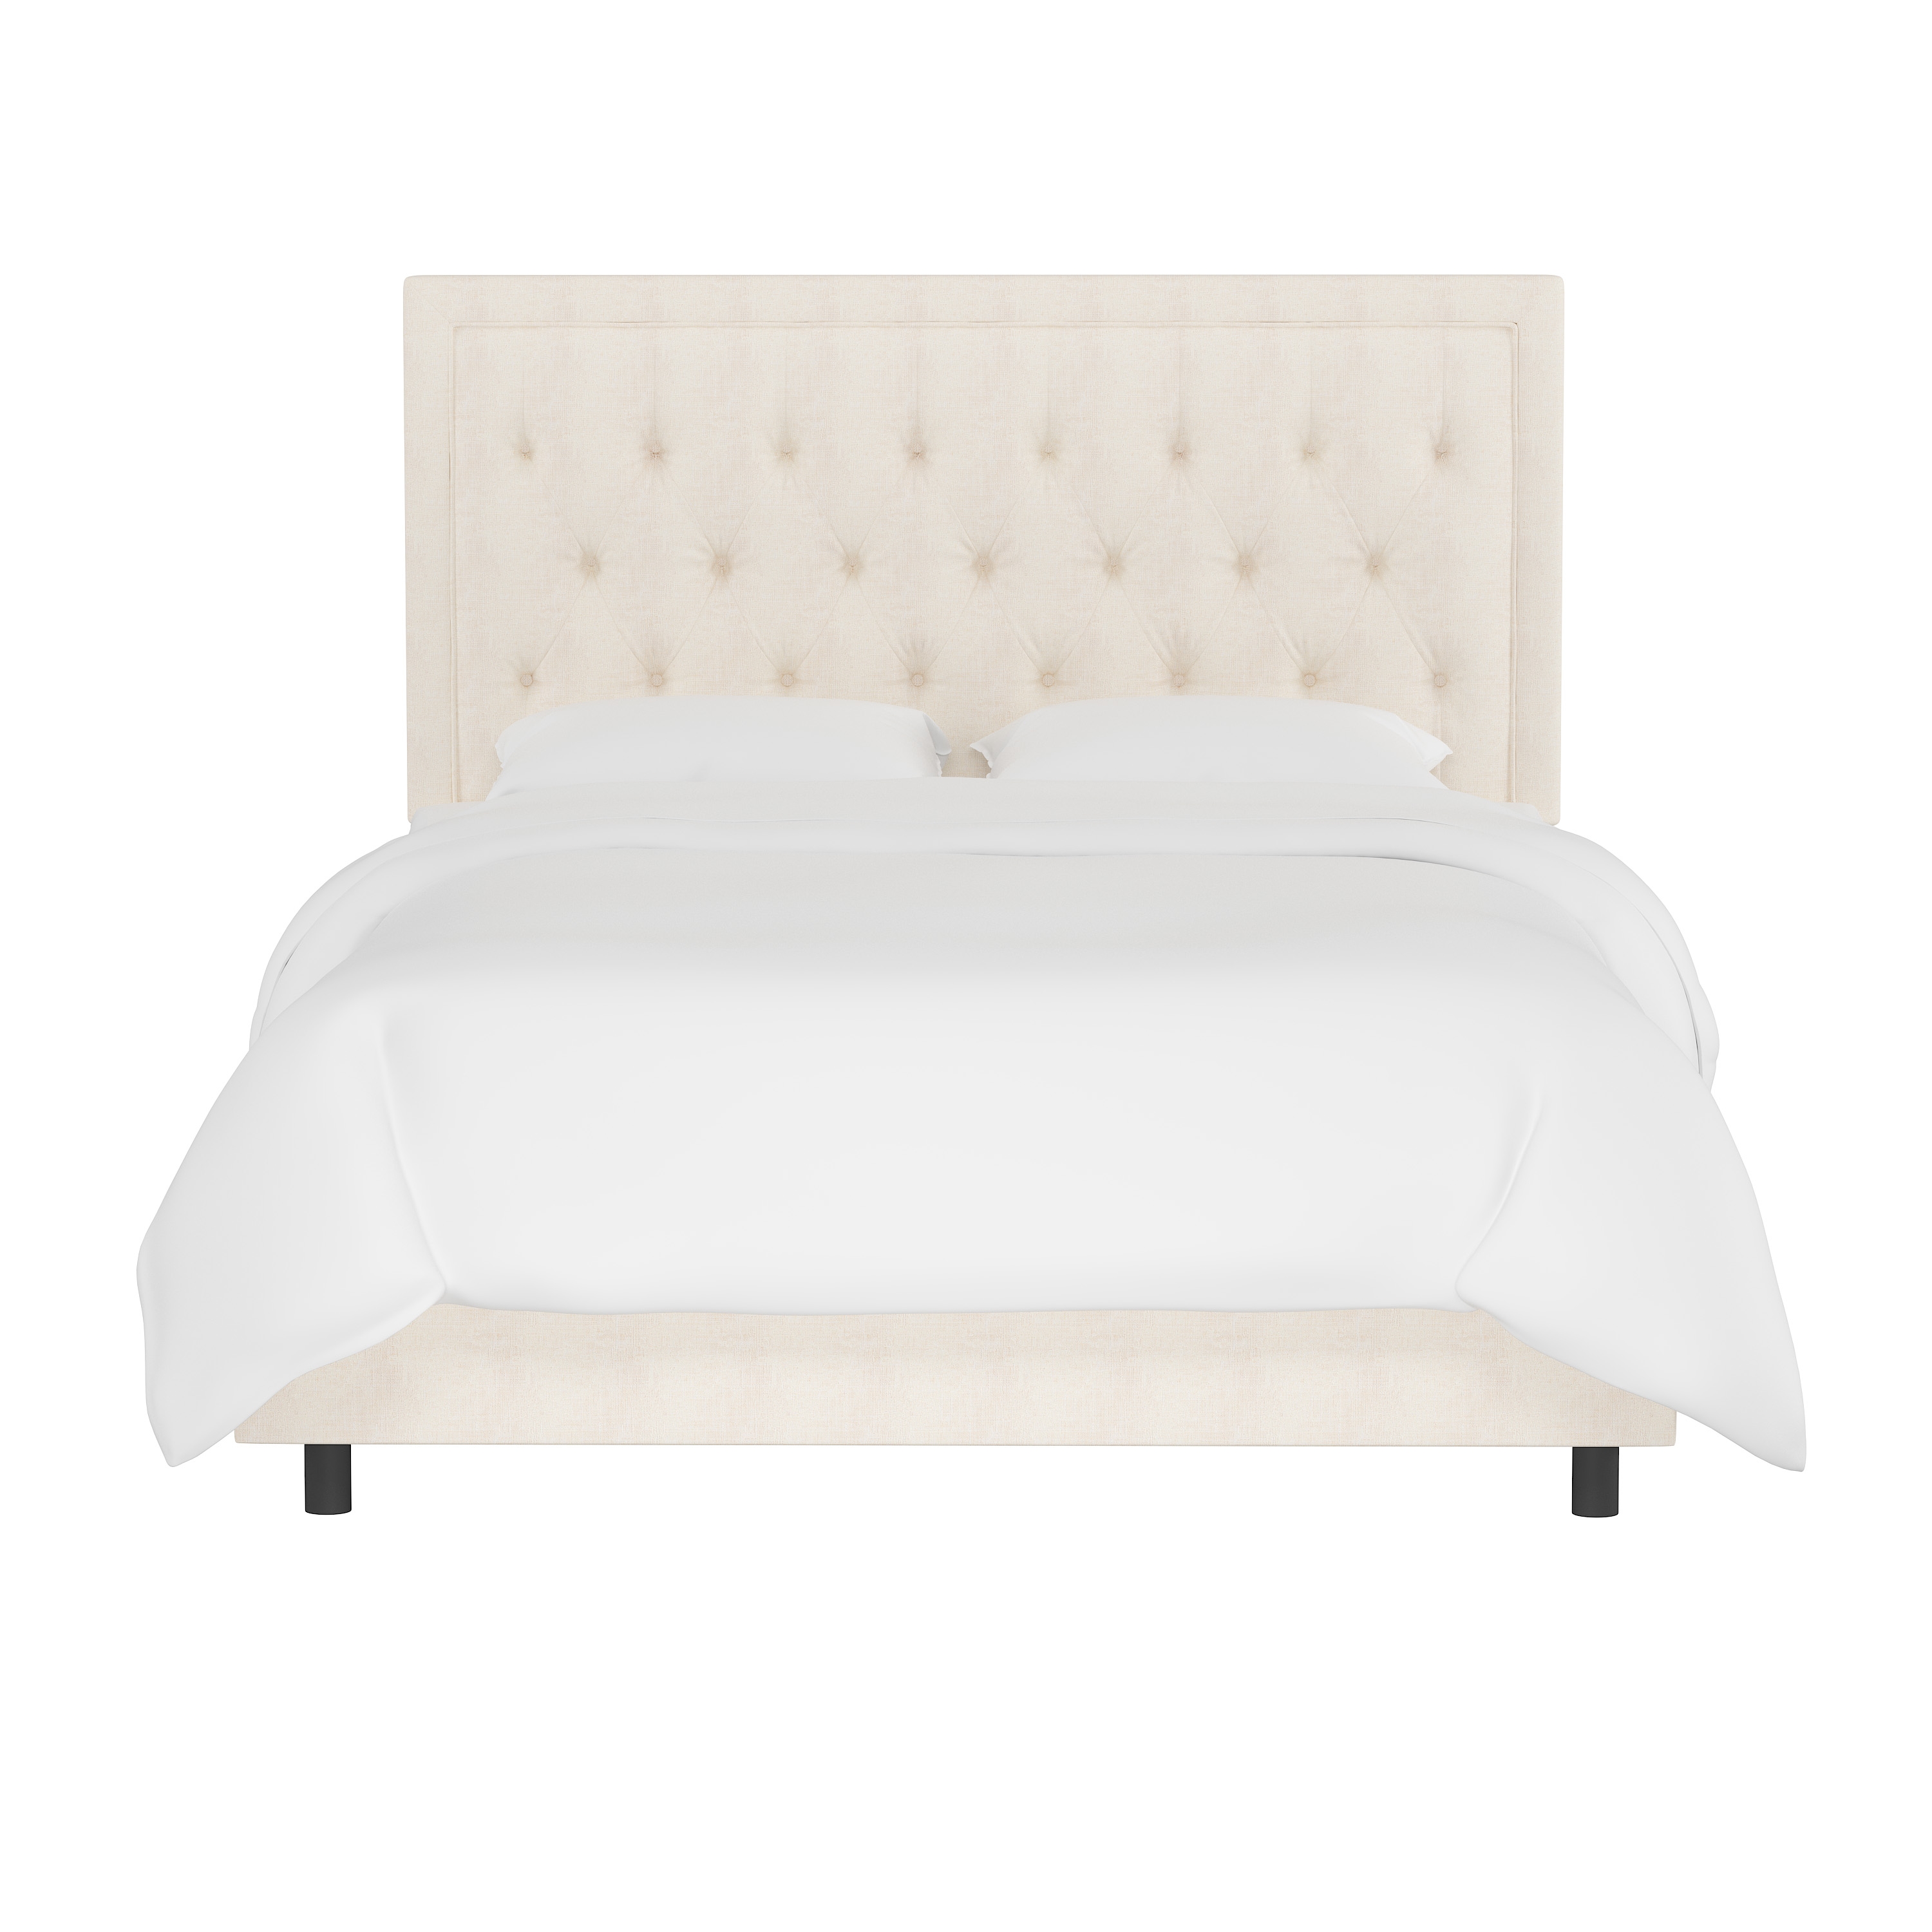 Lafayette Bed, Full, White - Image 1